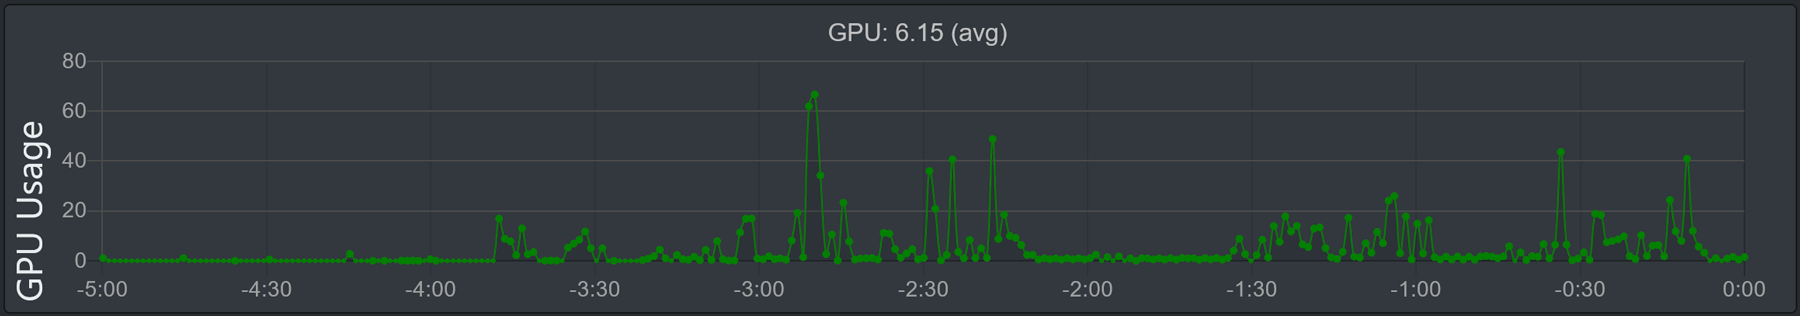 Image of the 'GPU Usage' graph